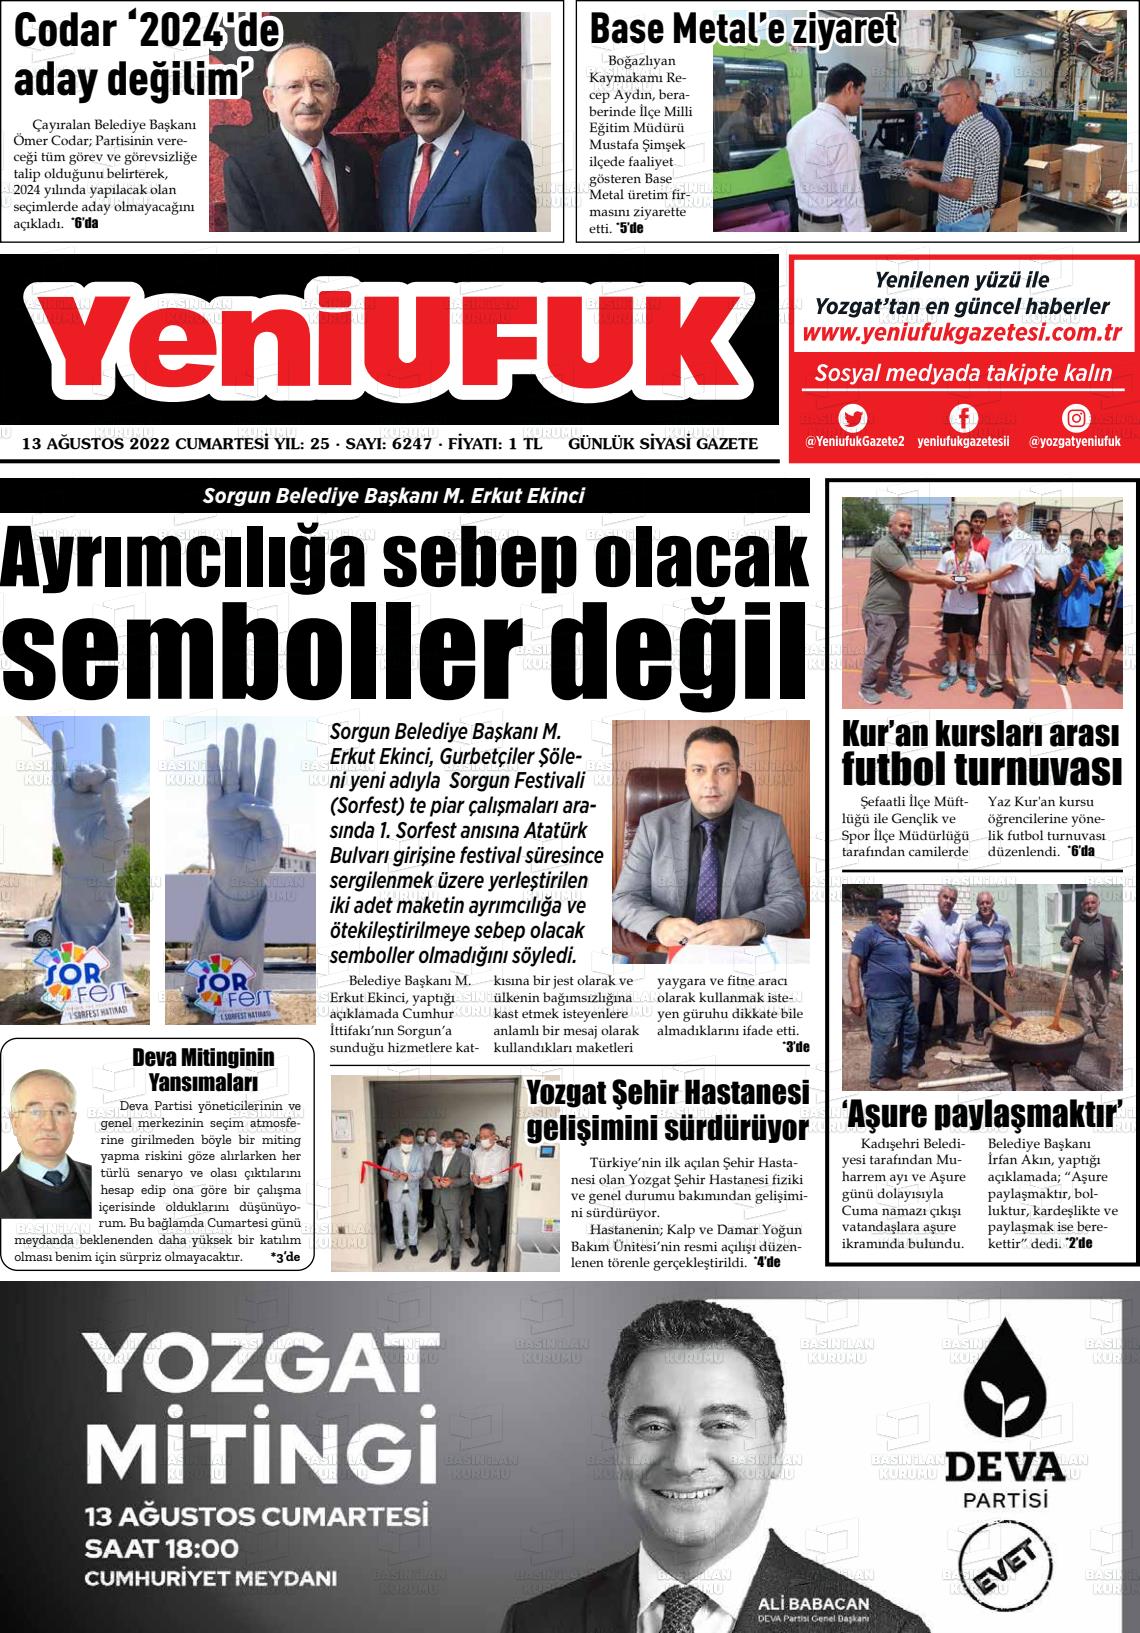 13 Ağustos 2022 Yozgat Yeni Ufuk Gazete Manşeti